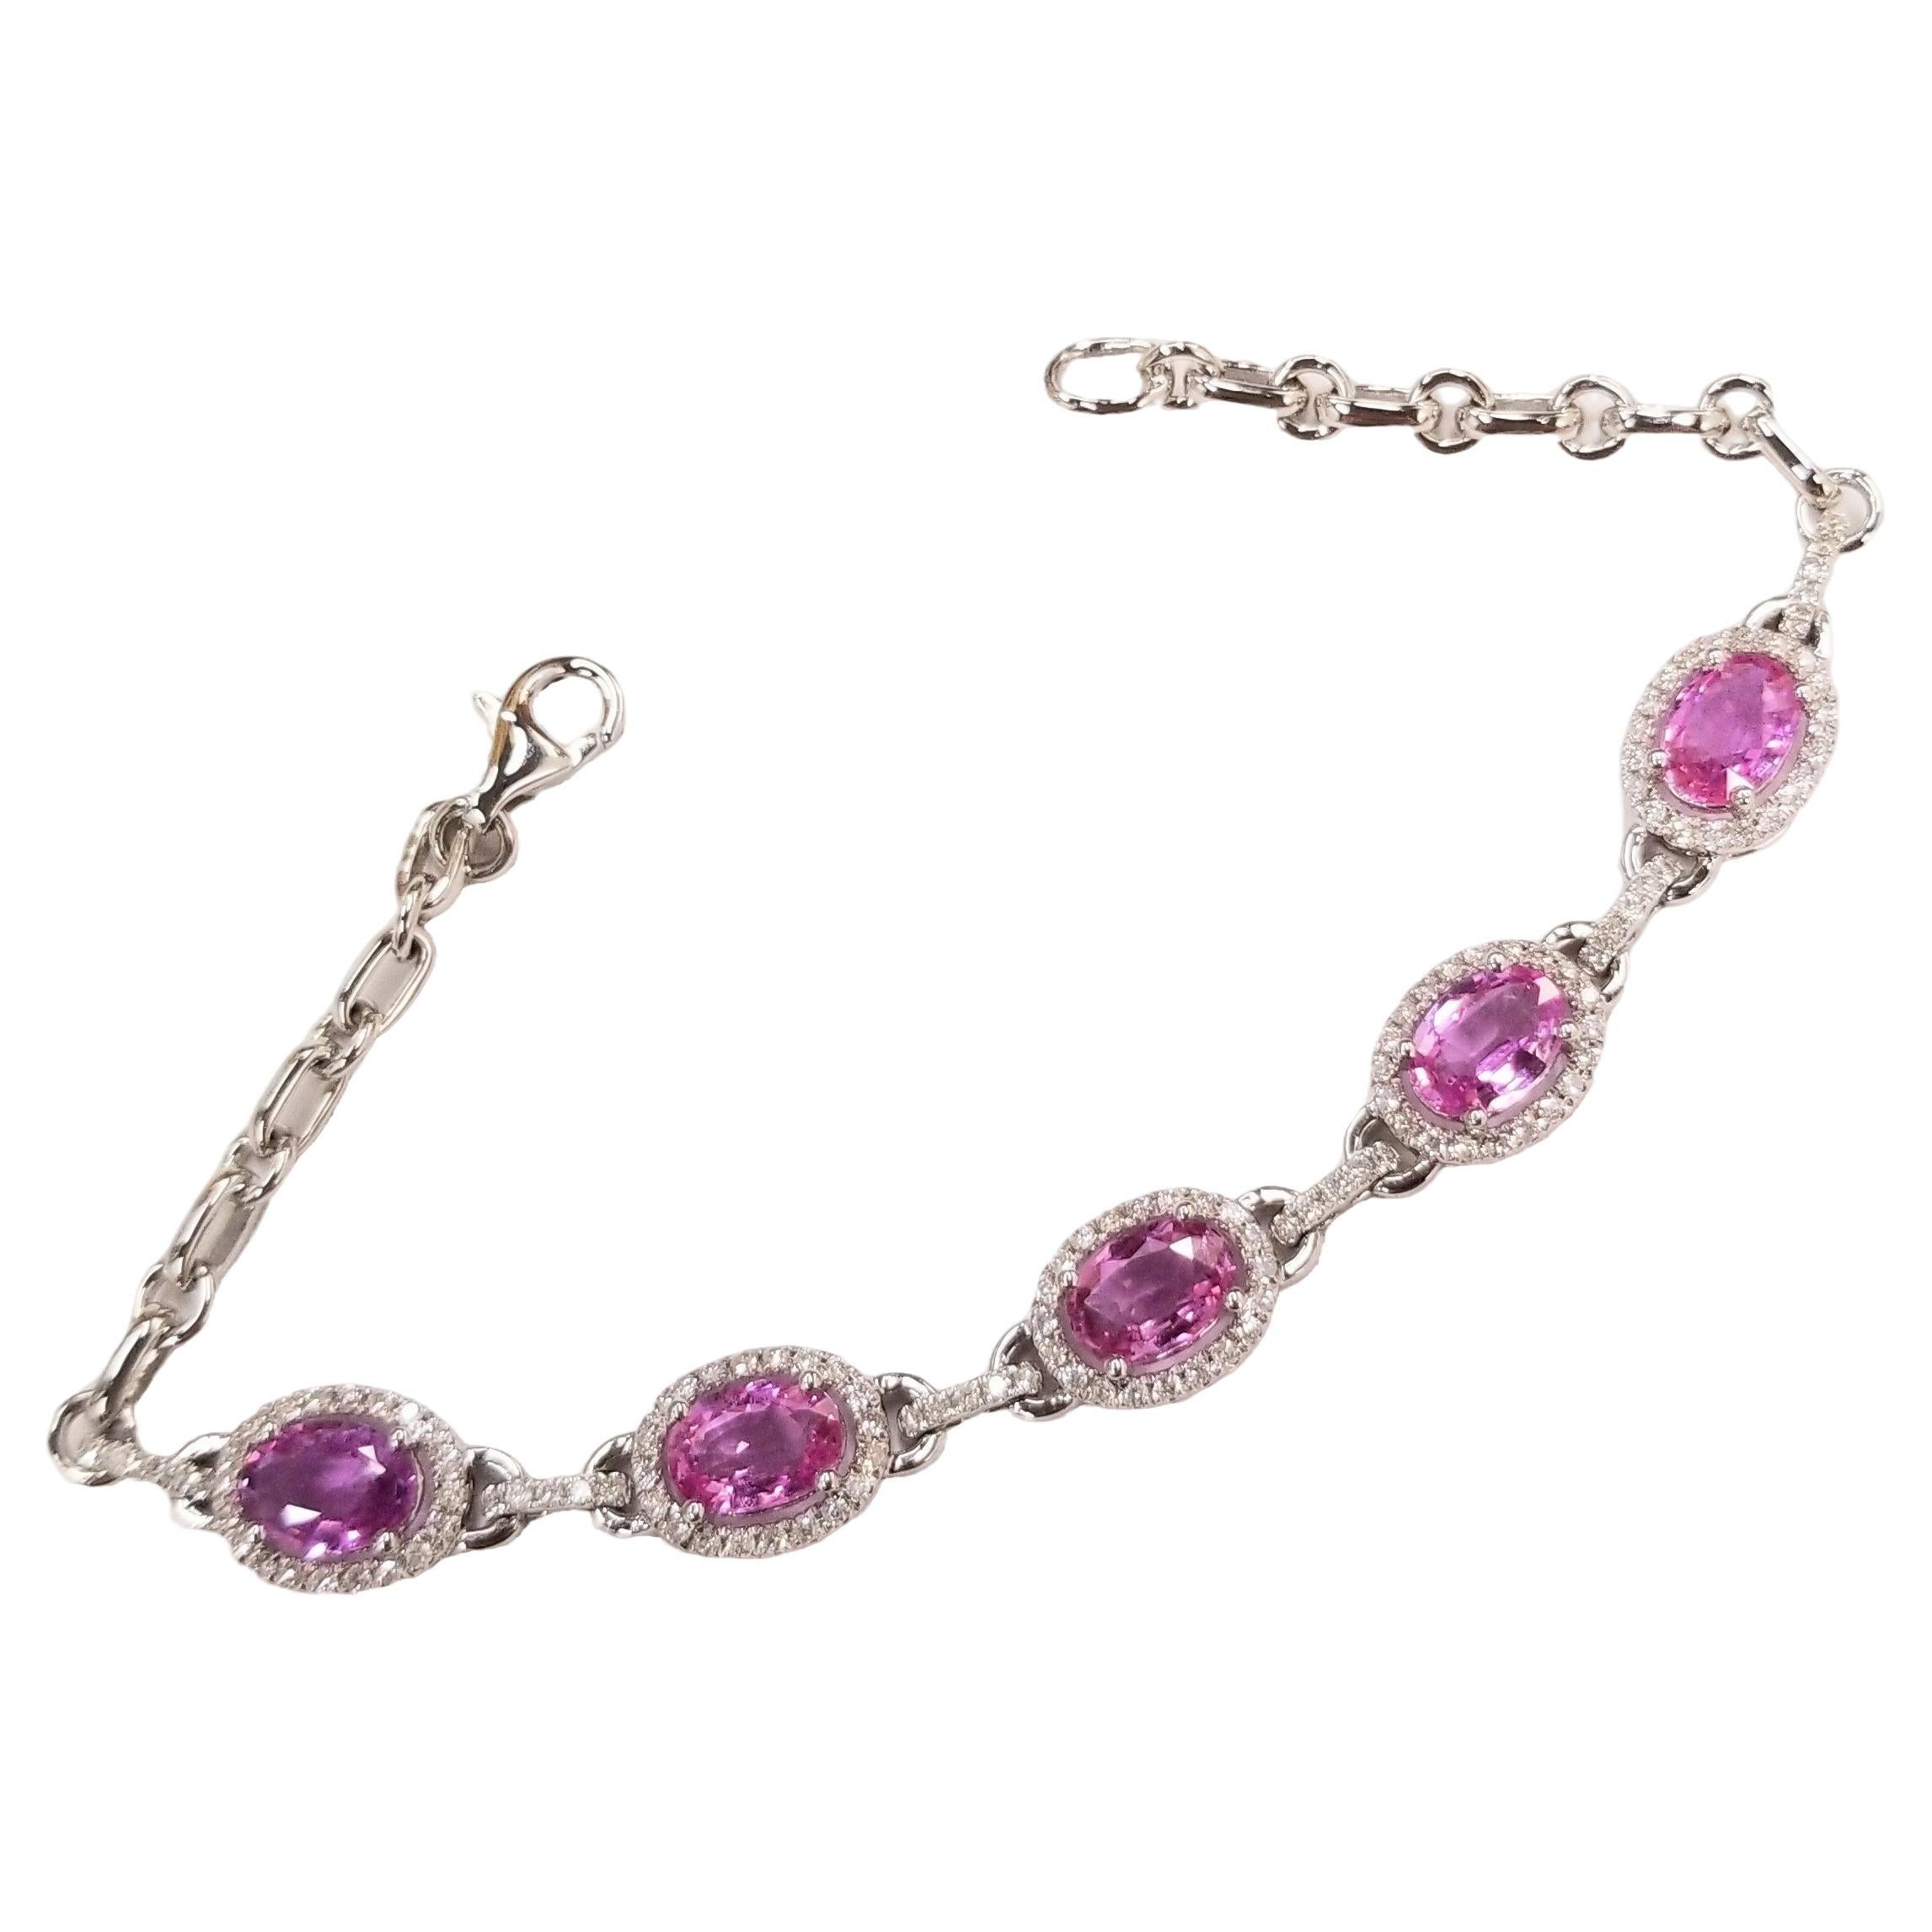 IGI Certified 4.24 Carat Pink Sapphire & Diamond Bracelet in 18K White Gold